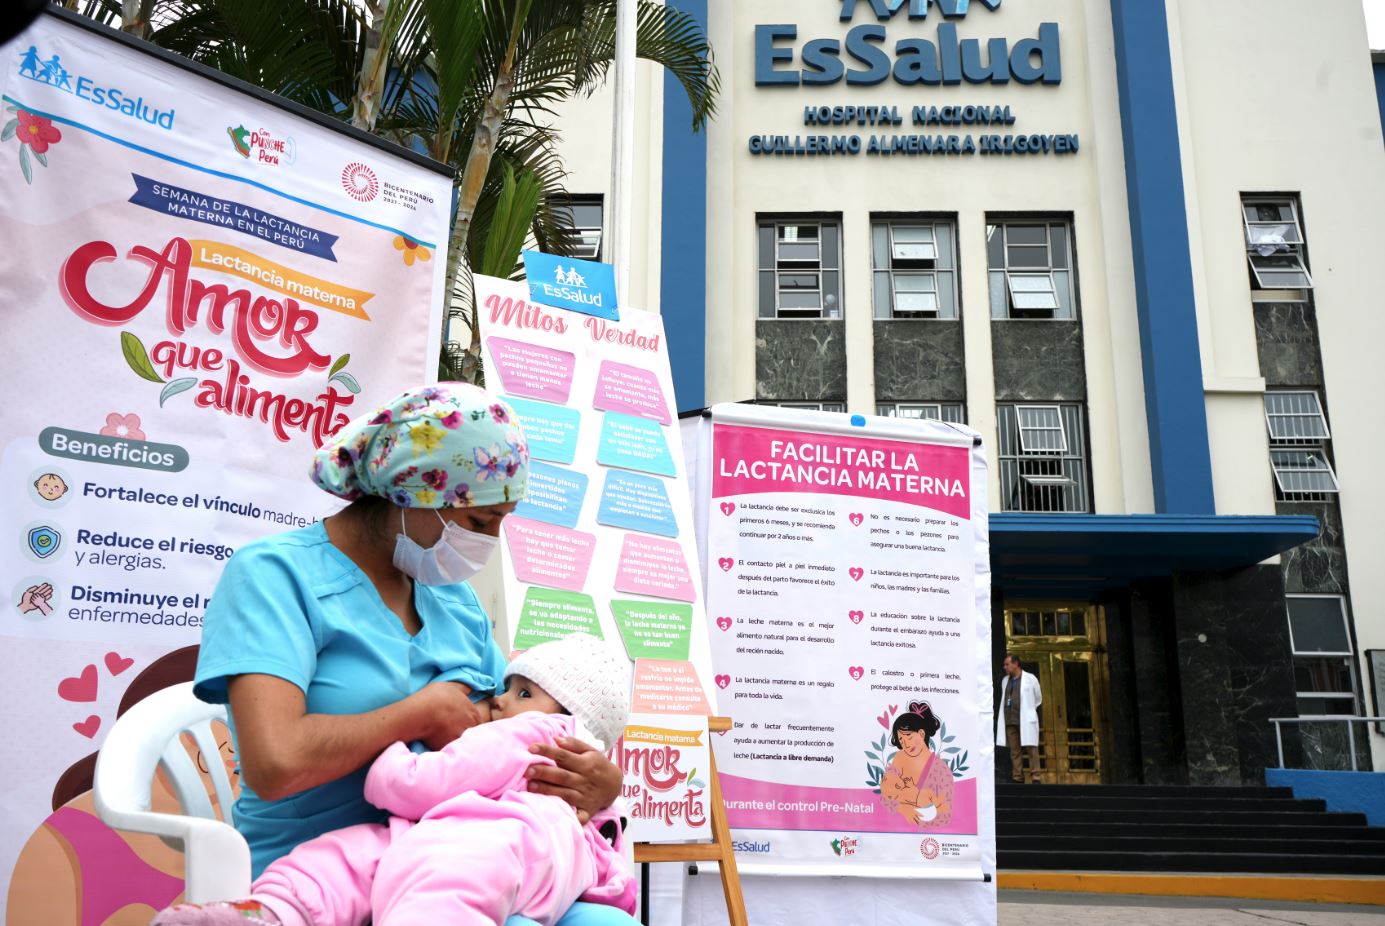 Essalud - “Amor que alimenta”: EsSalud realiza feria de salud que promueve la lactancia materna para disminuir los índices de anemia